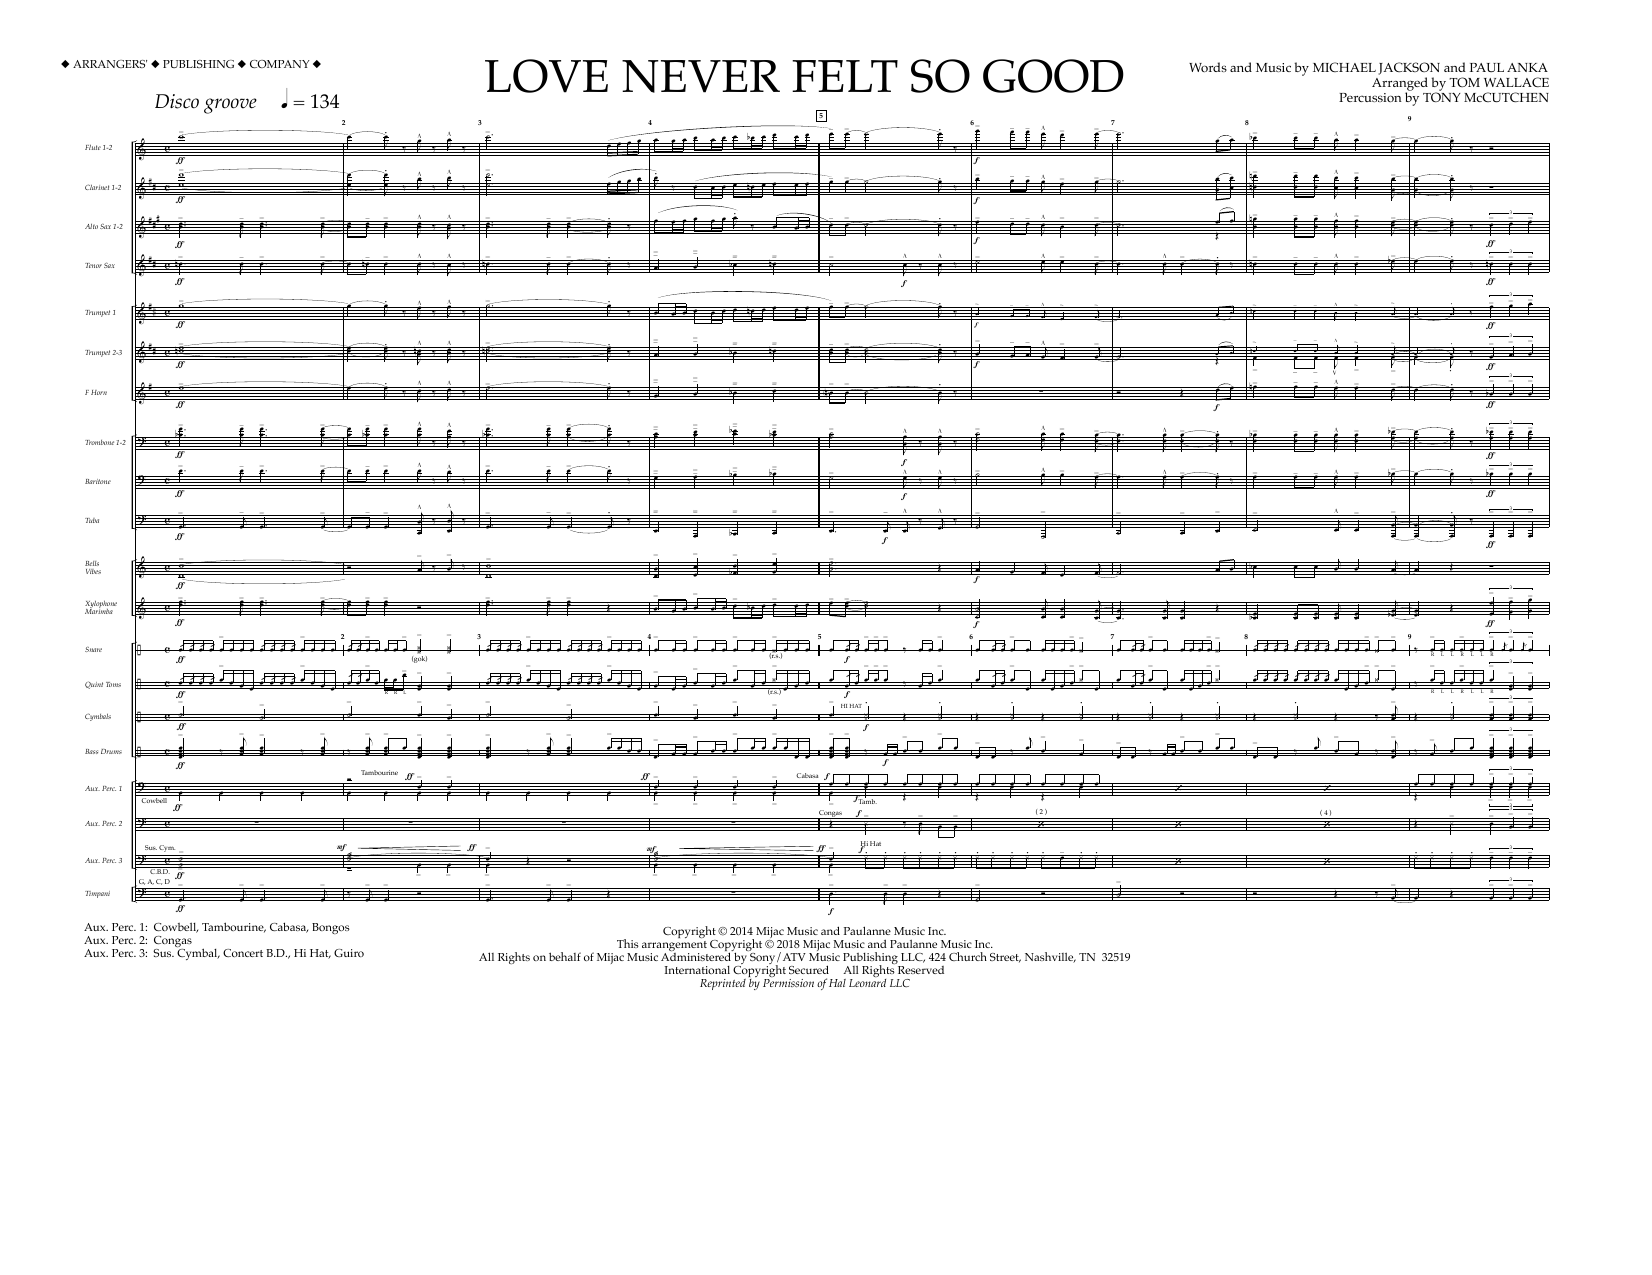 Download Tom Wallace Love Never Felt So Good - Full Score Sheet Music